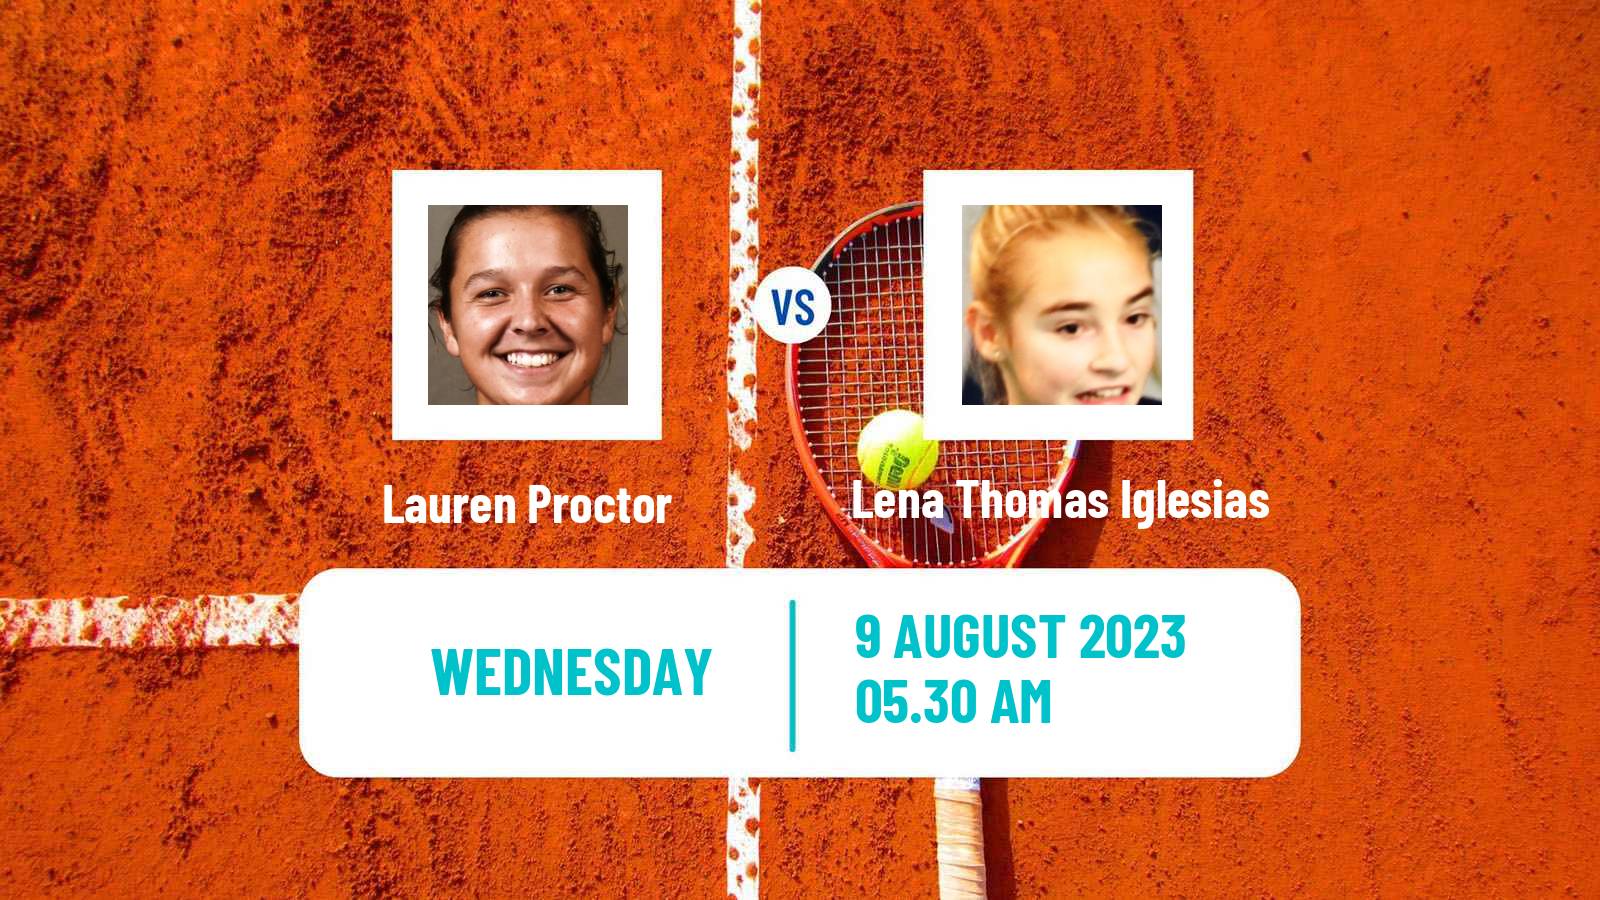 Tennis ITF W15 Monastir 22 Women Lauren Proctor - Lena Thomas Iglesias